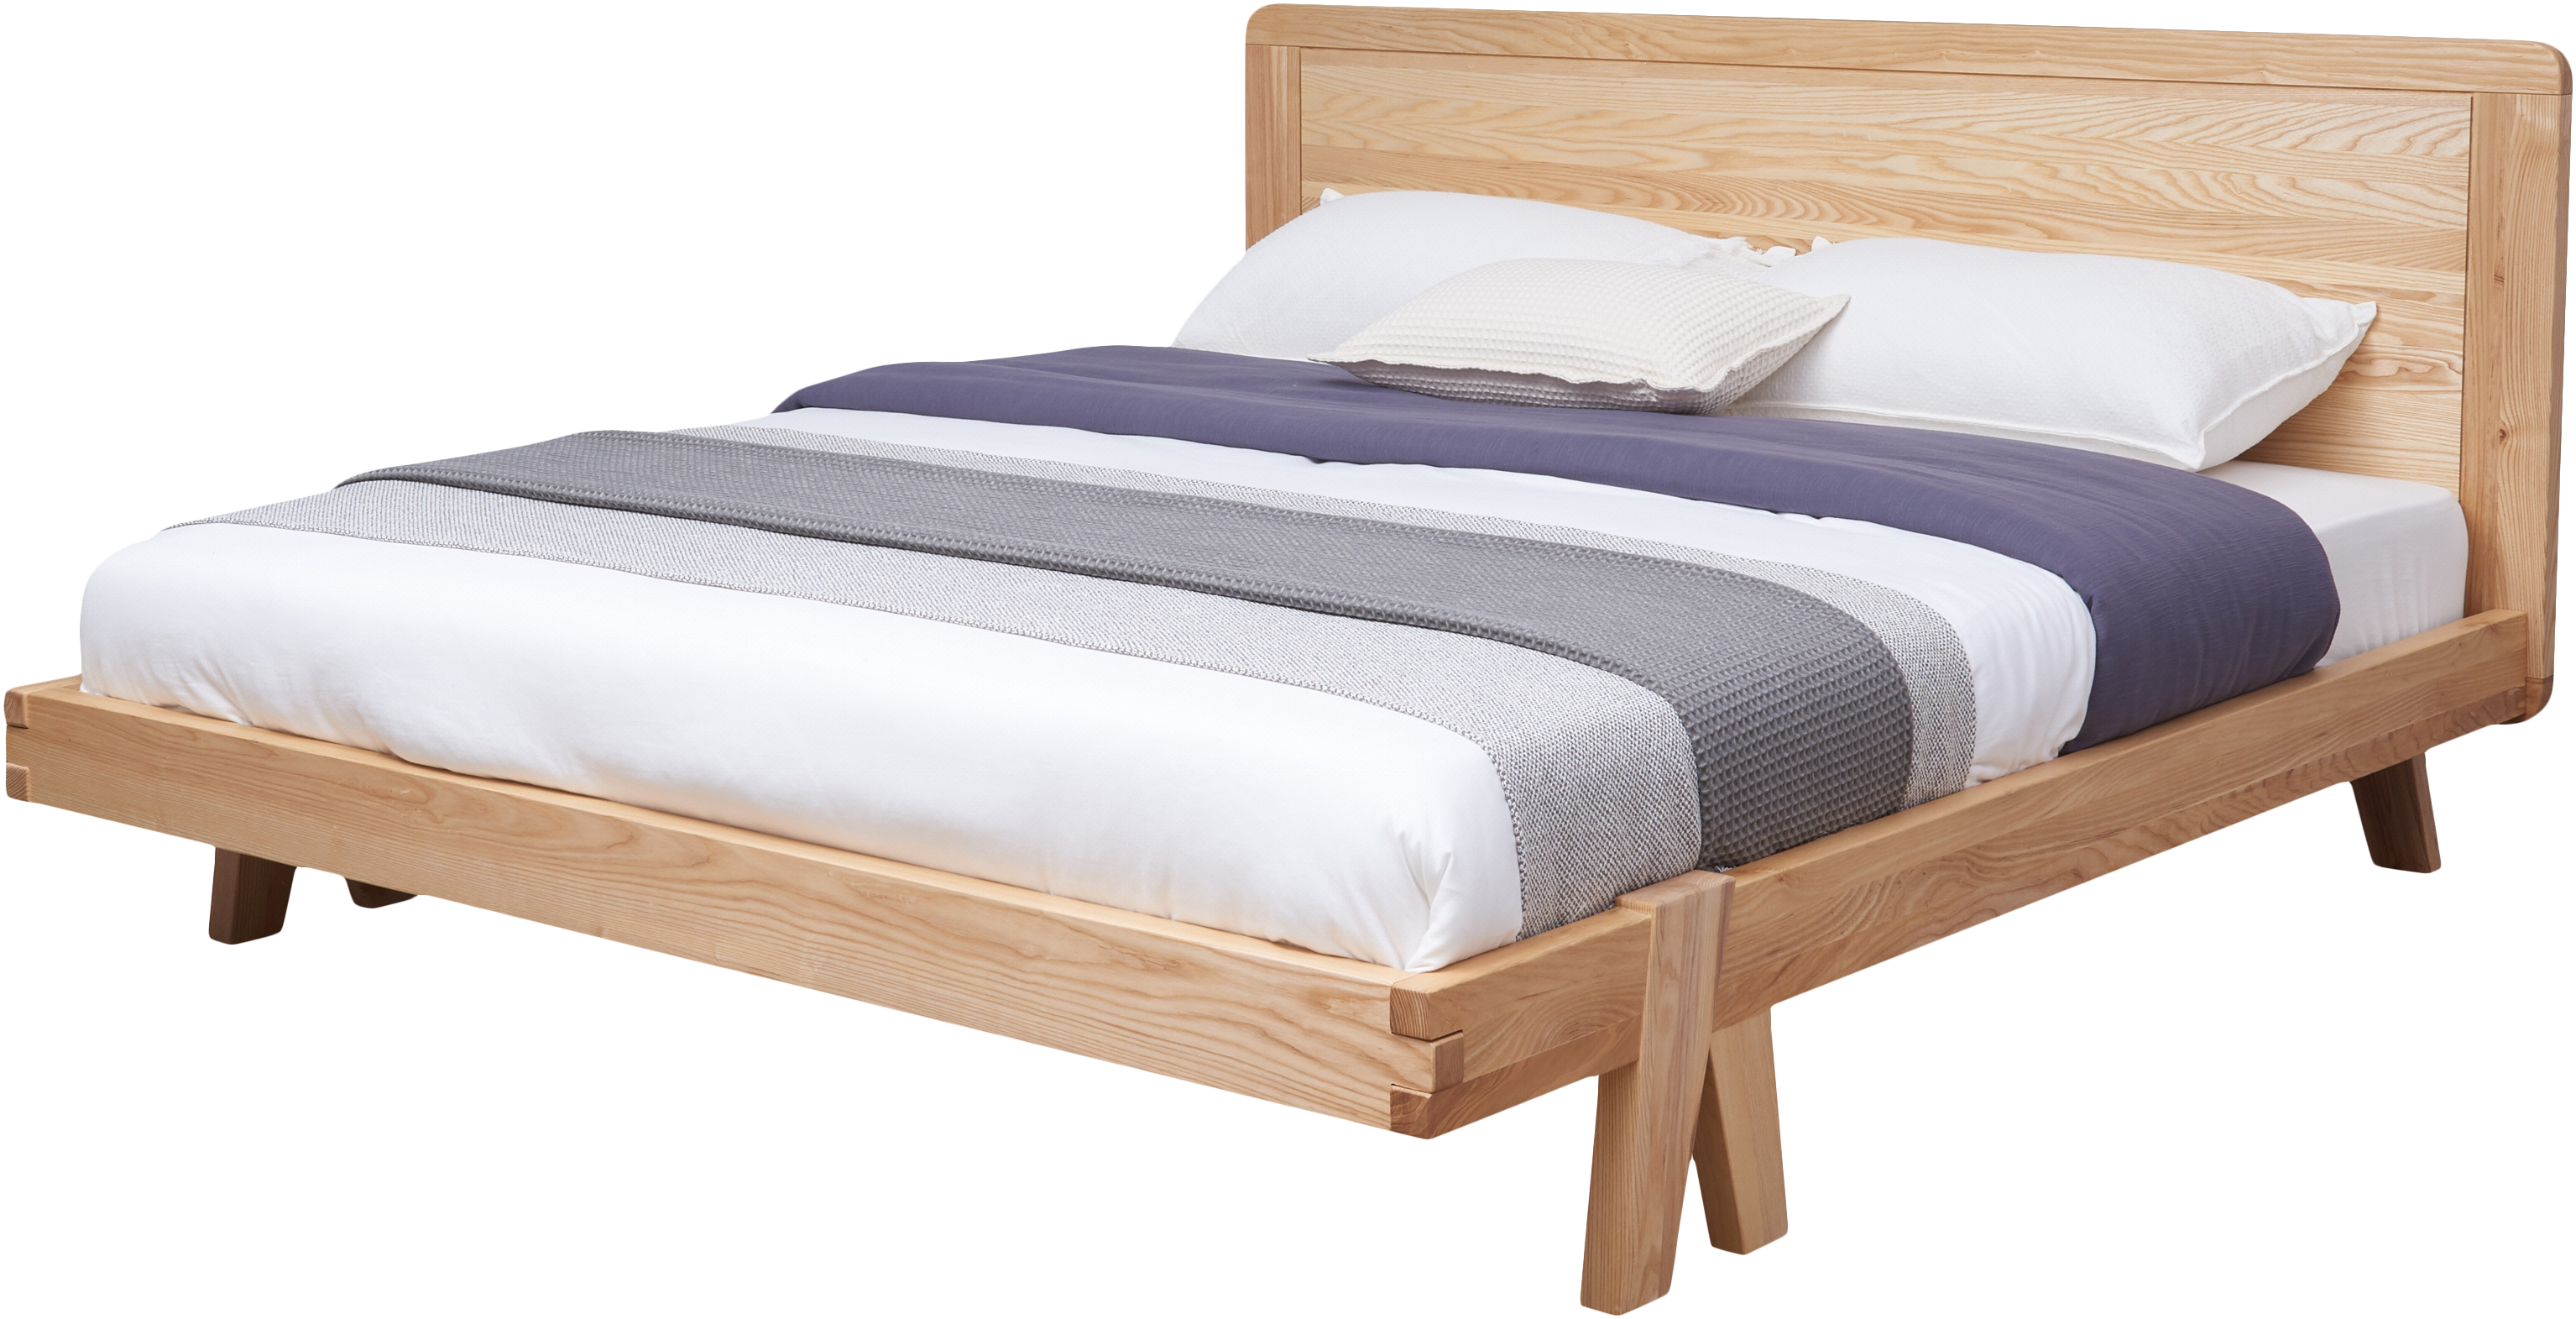 47 mb 风格北欧风 格式png 分类床,双人床 场景卧室 产品规格 型号